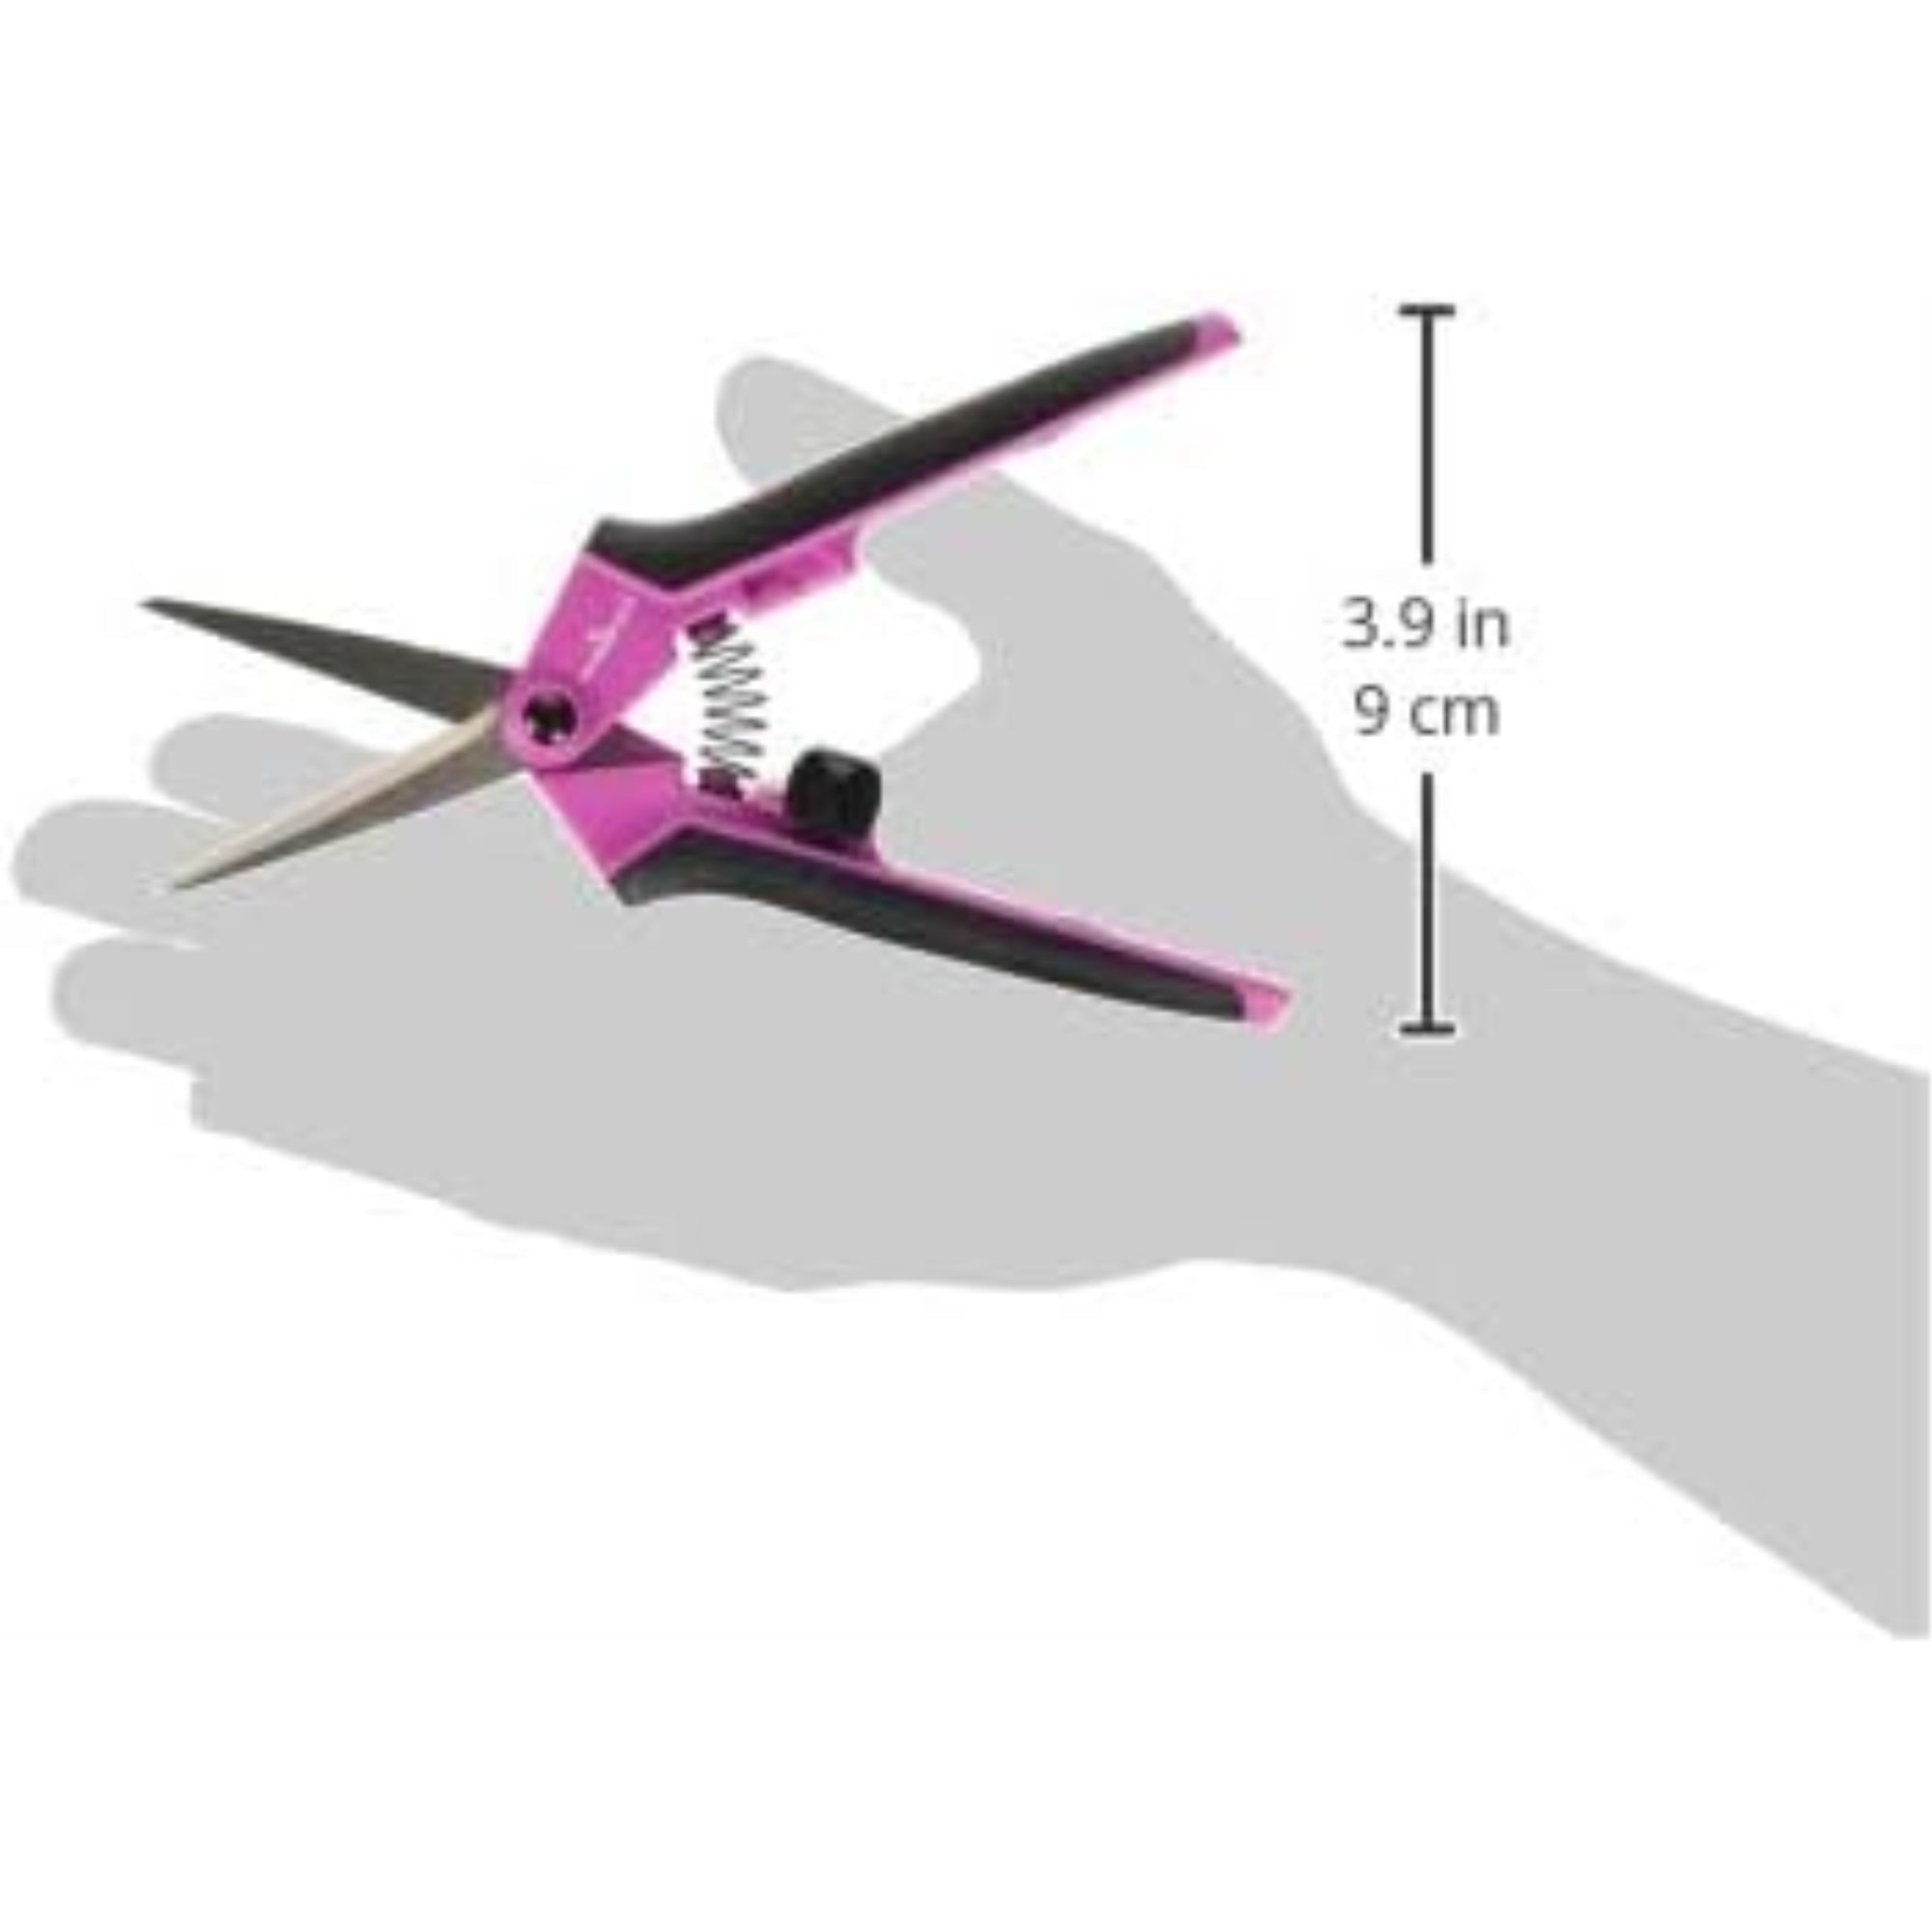 Hydrofarm Precision Pruner, Small, Pink